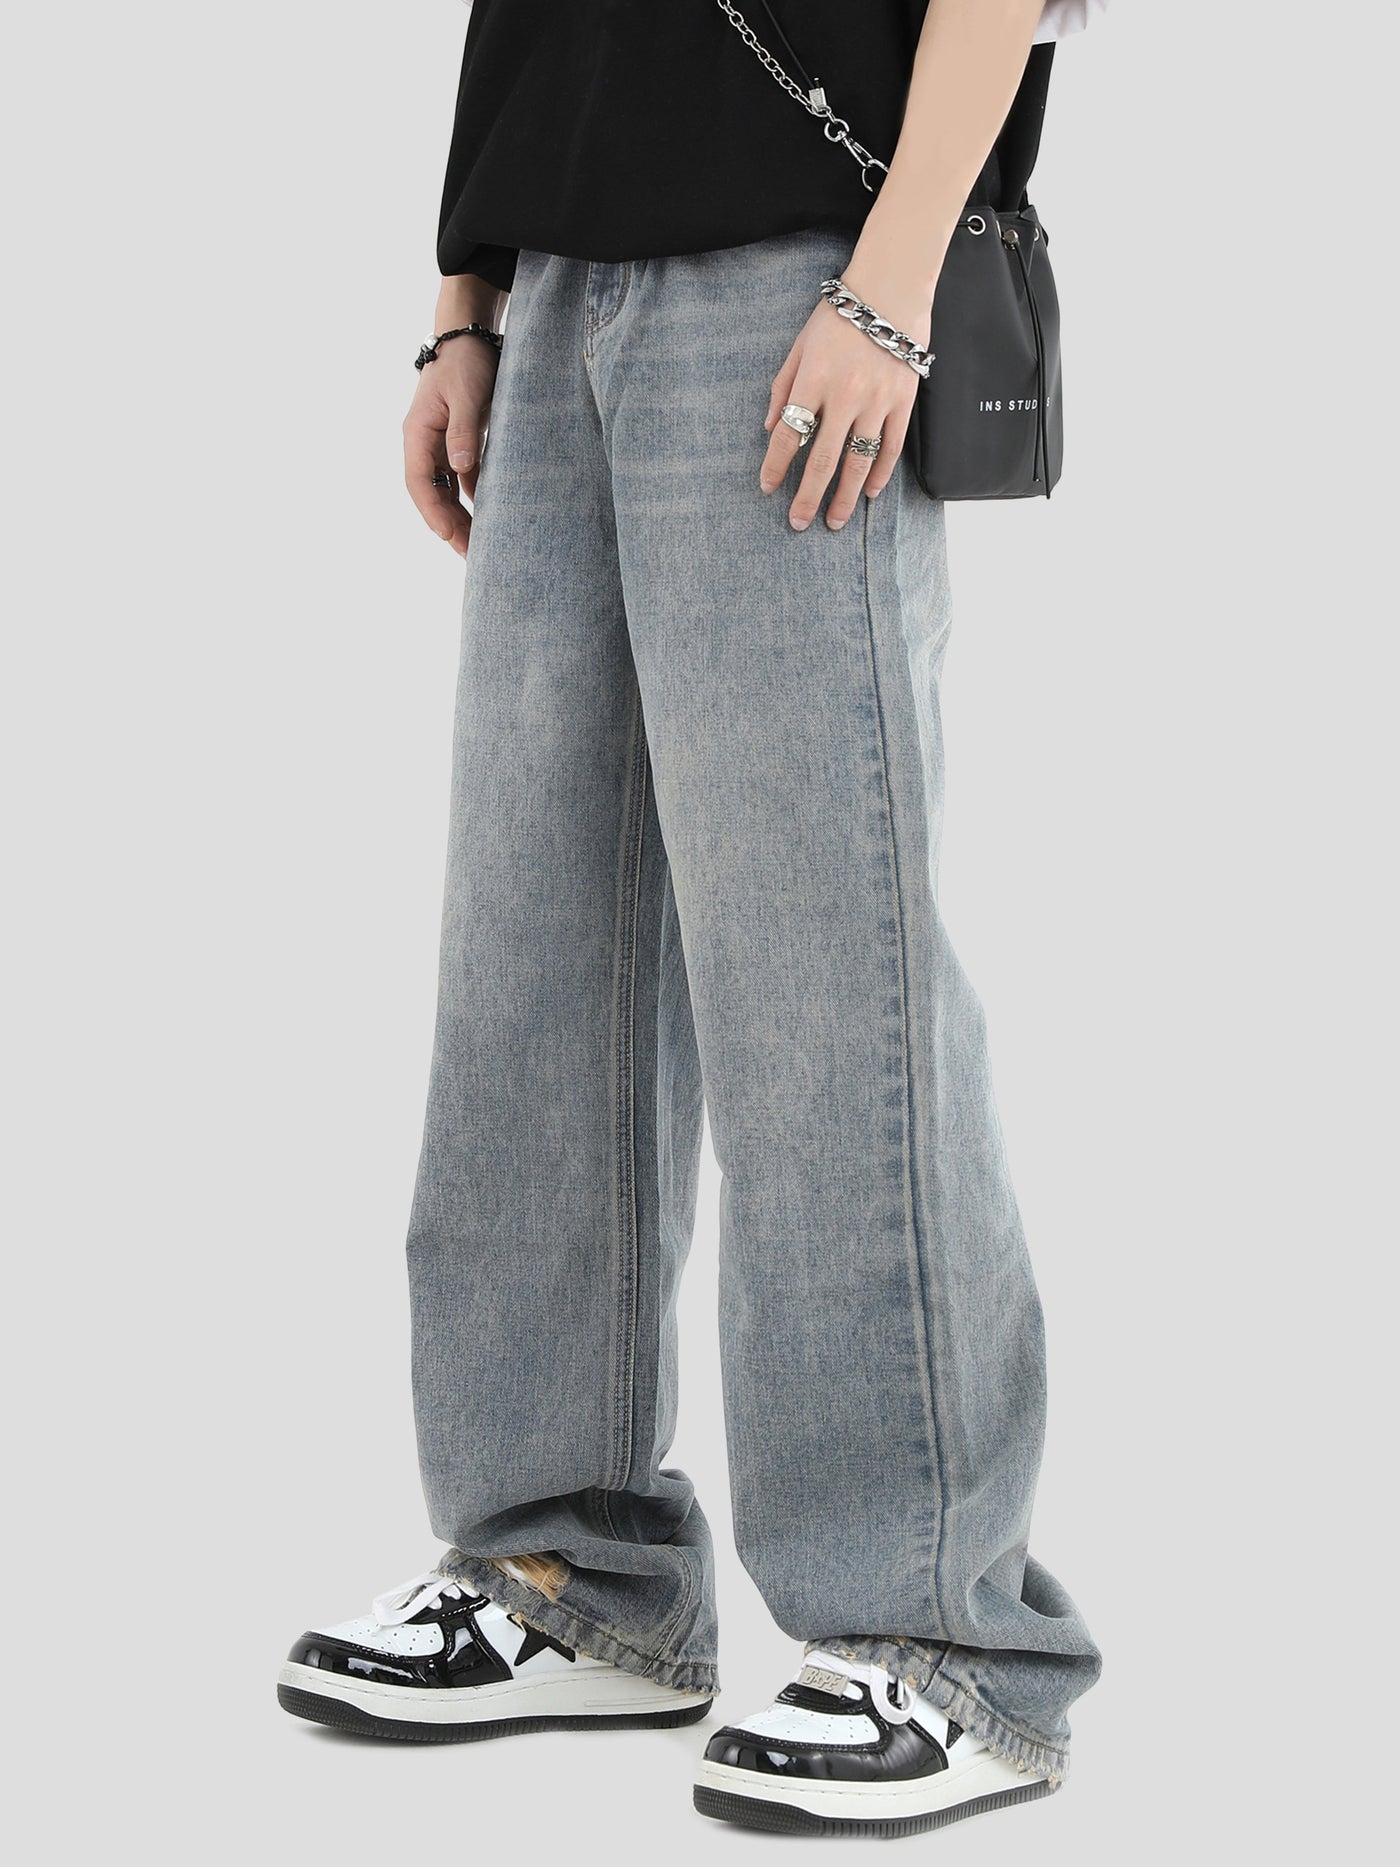 INS Korea Cat Whisker Ripped Hem Jeans Korean Street Fashion Jeans By INS Korea Shop Online at OH Vault